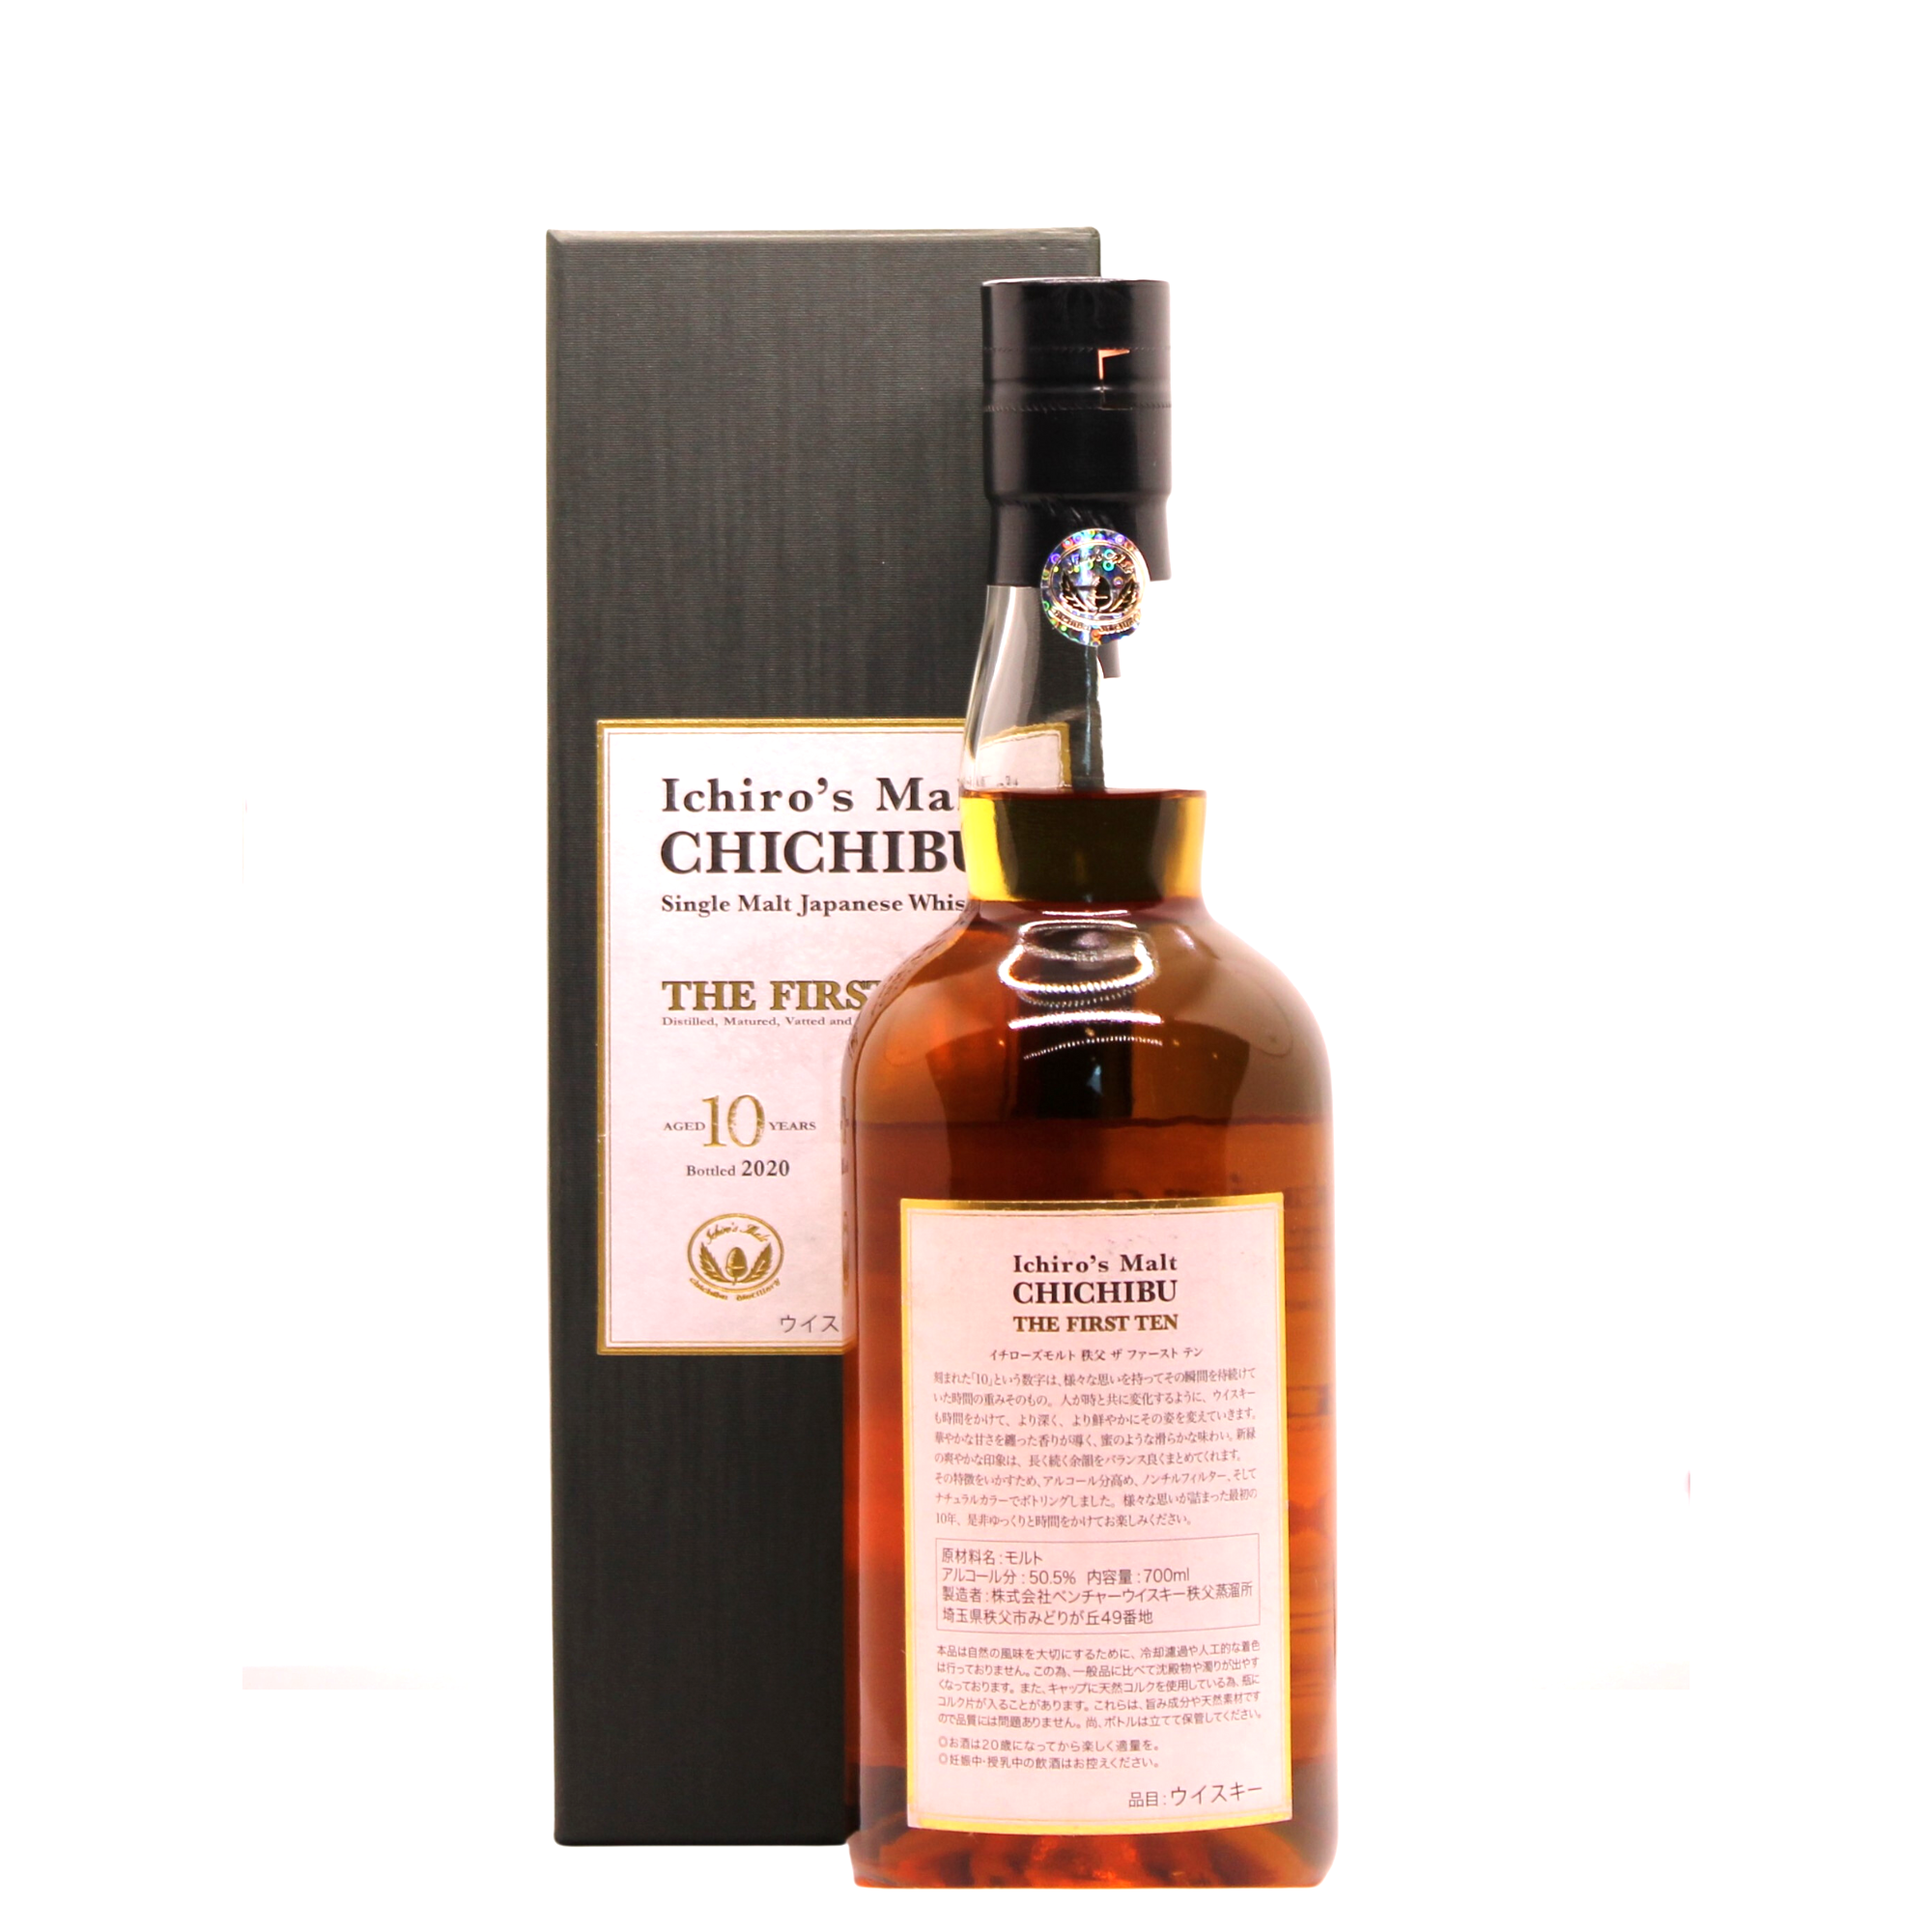 Ichiro's Malt Chichibu "The First TEN" 2020 Single Malt Japanese Whisky Back Label rare and Vintage Whisky